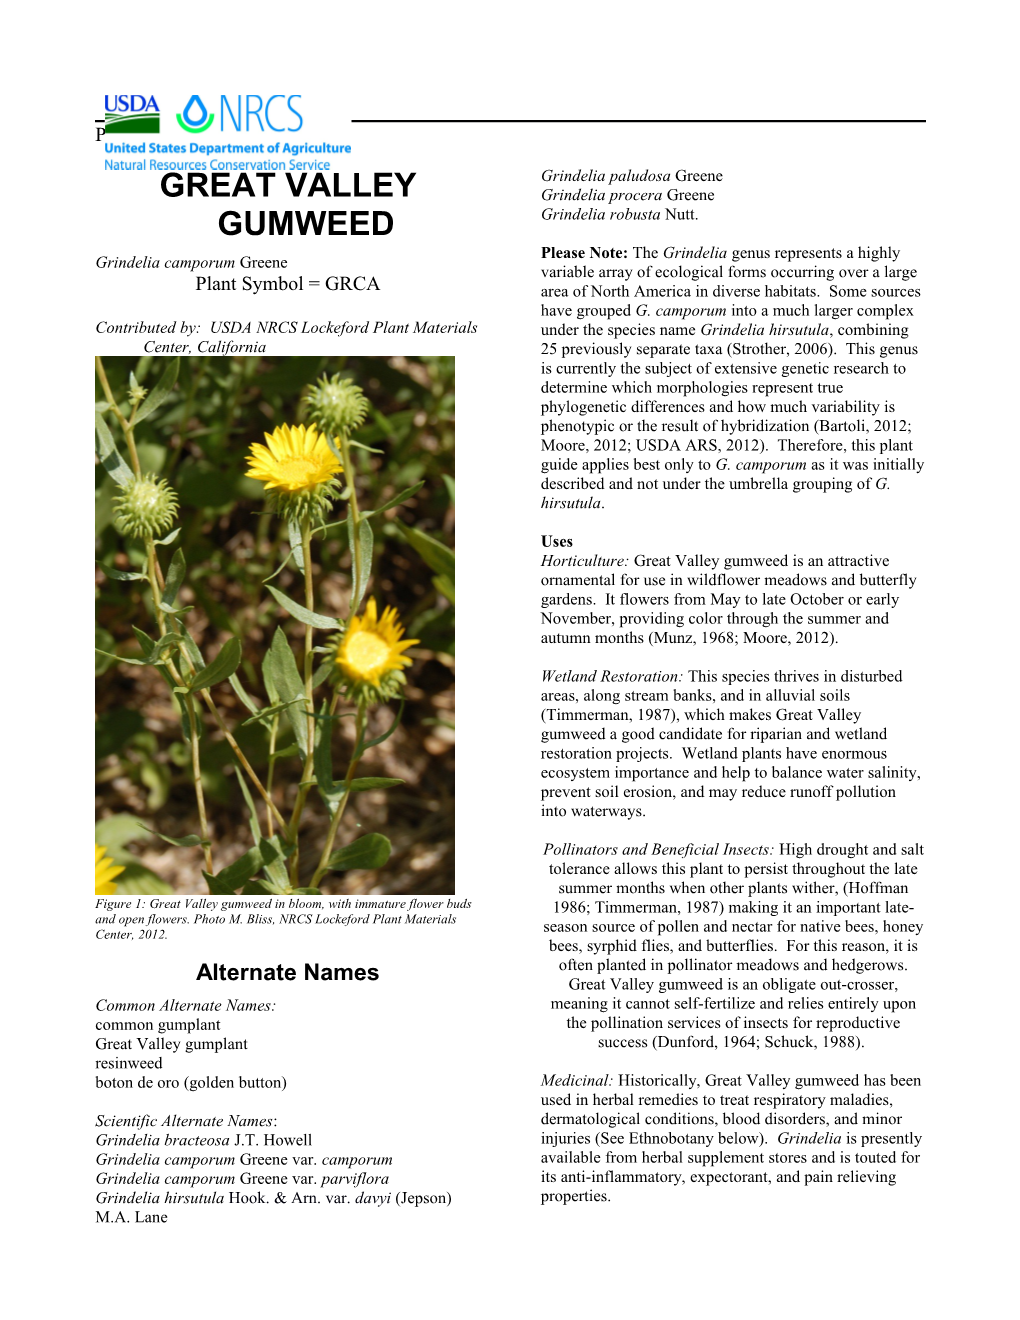 Great Valley Gumweed (Grindelia Camporum) Plant Guide